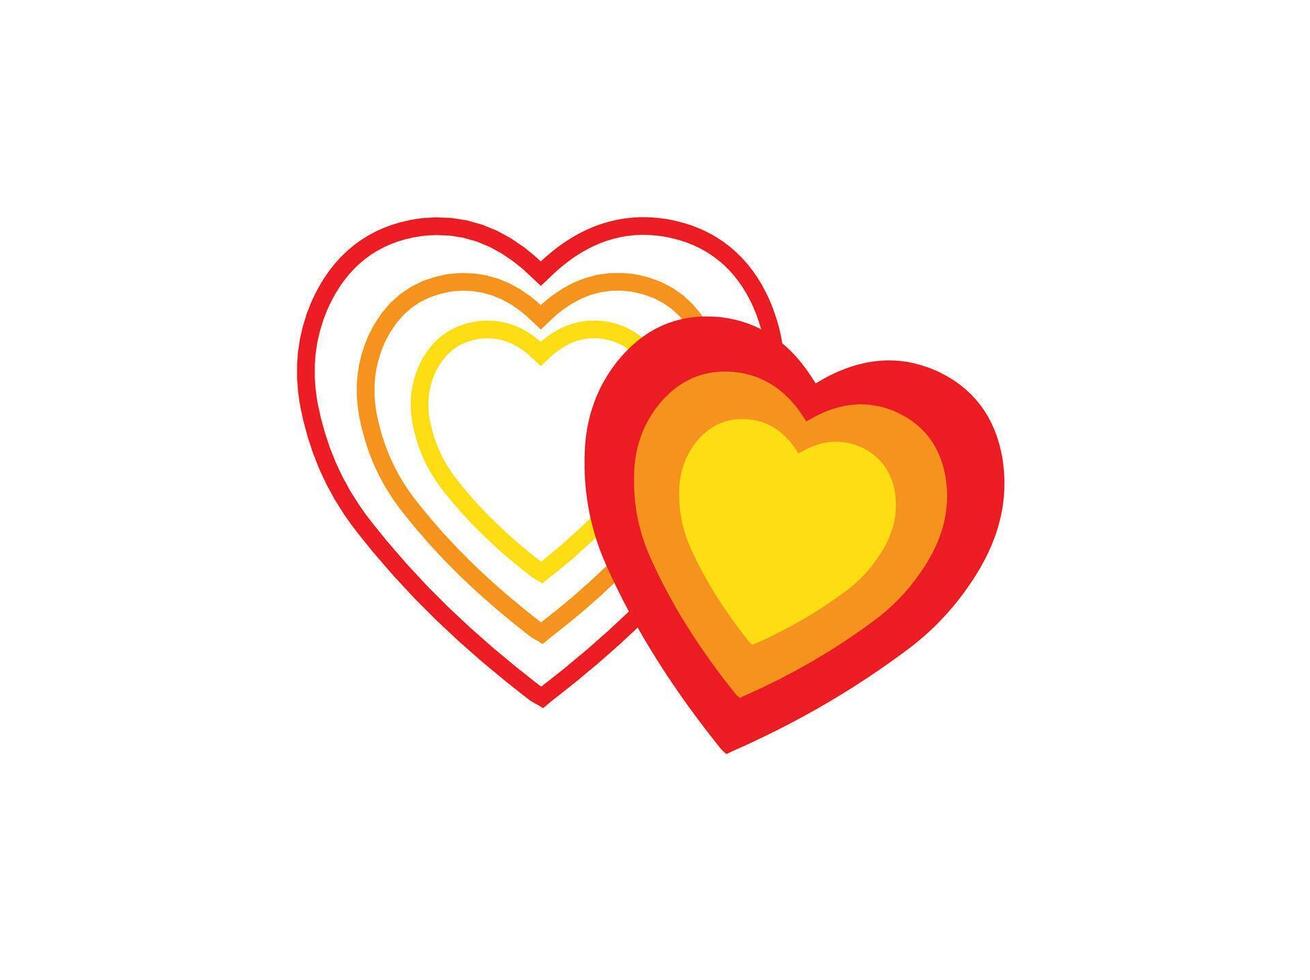 Valentines Day Heart Background Illustration vector